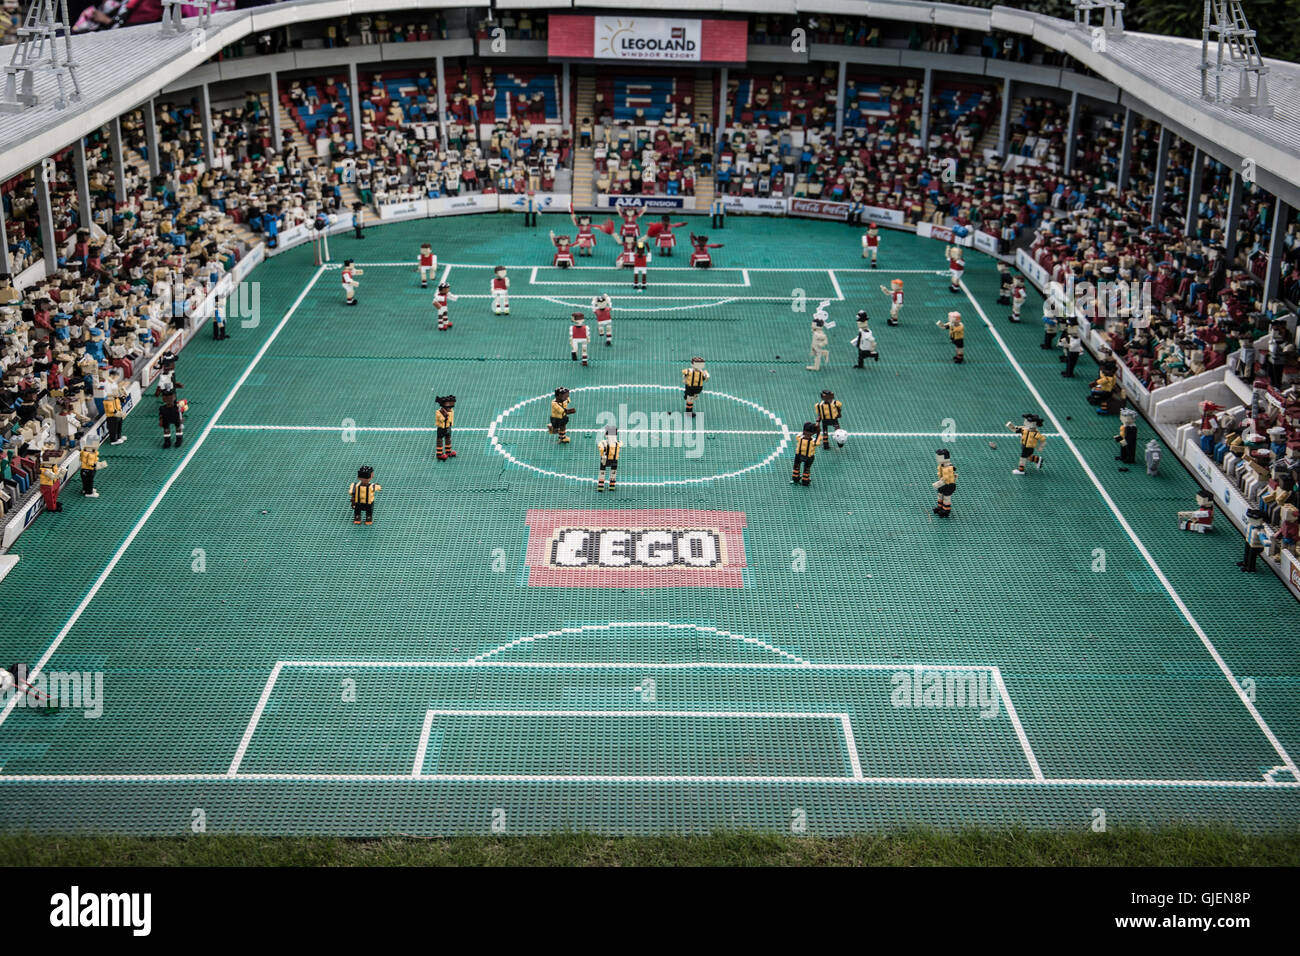 Lego stadium hi-res stock photography and images - Alamy